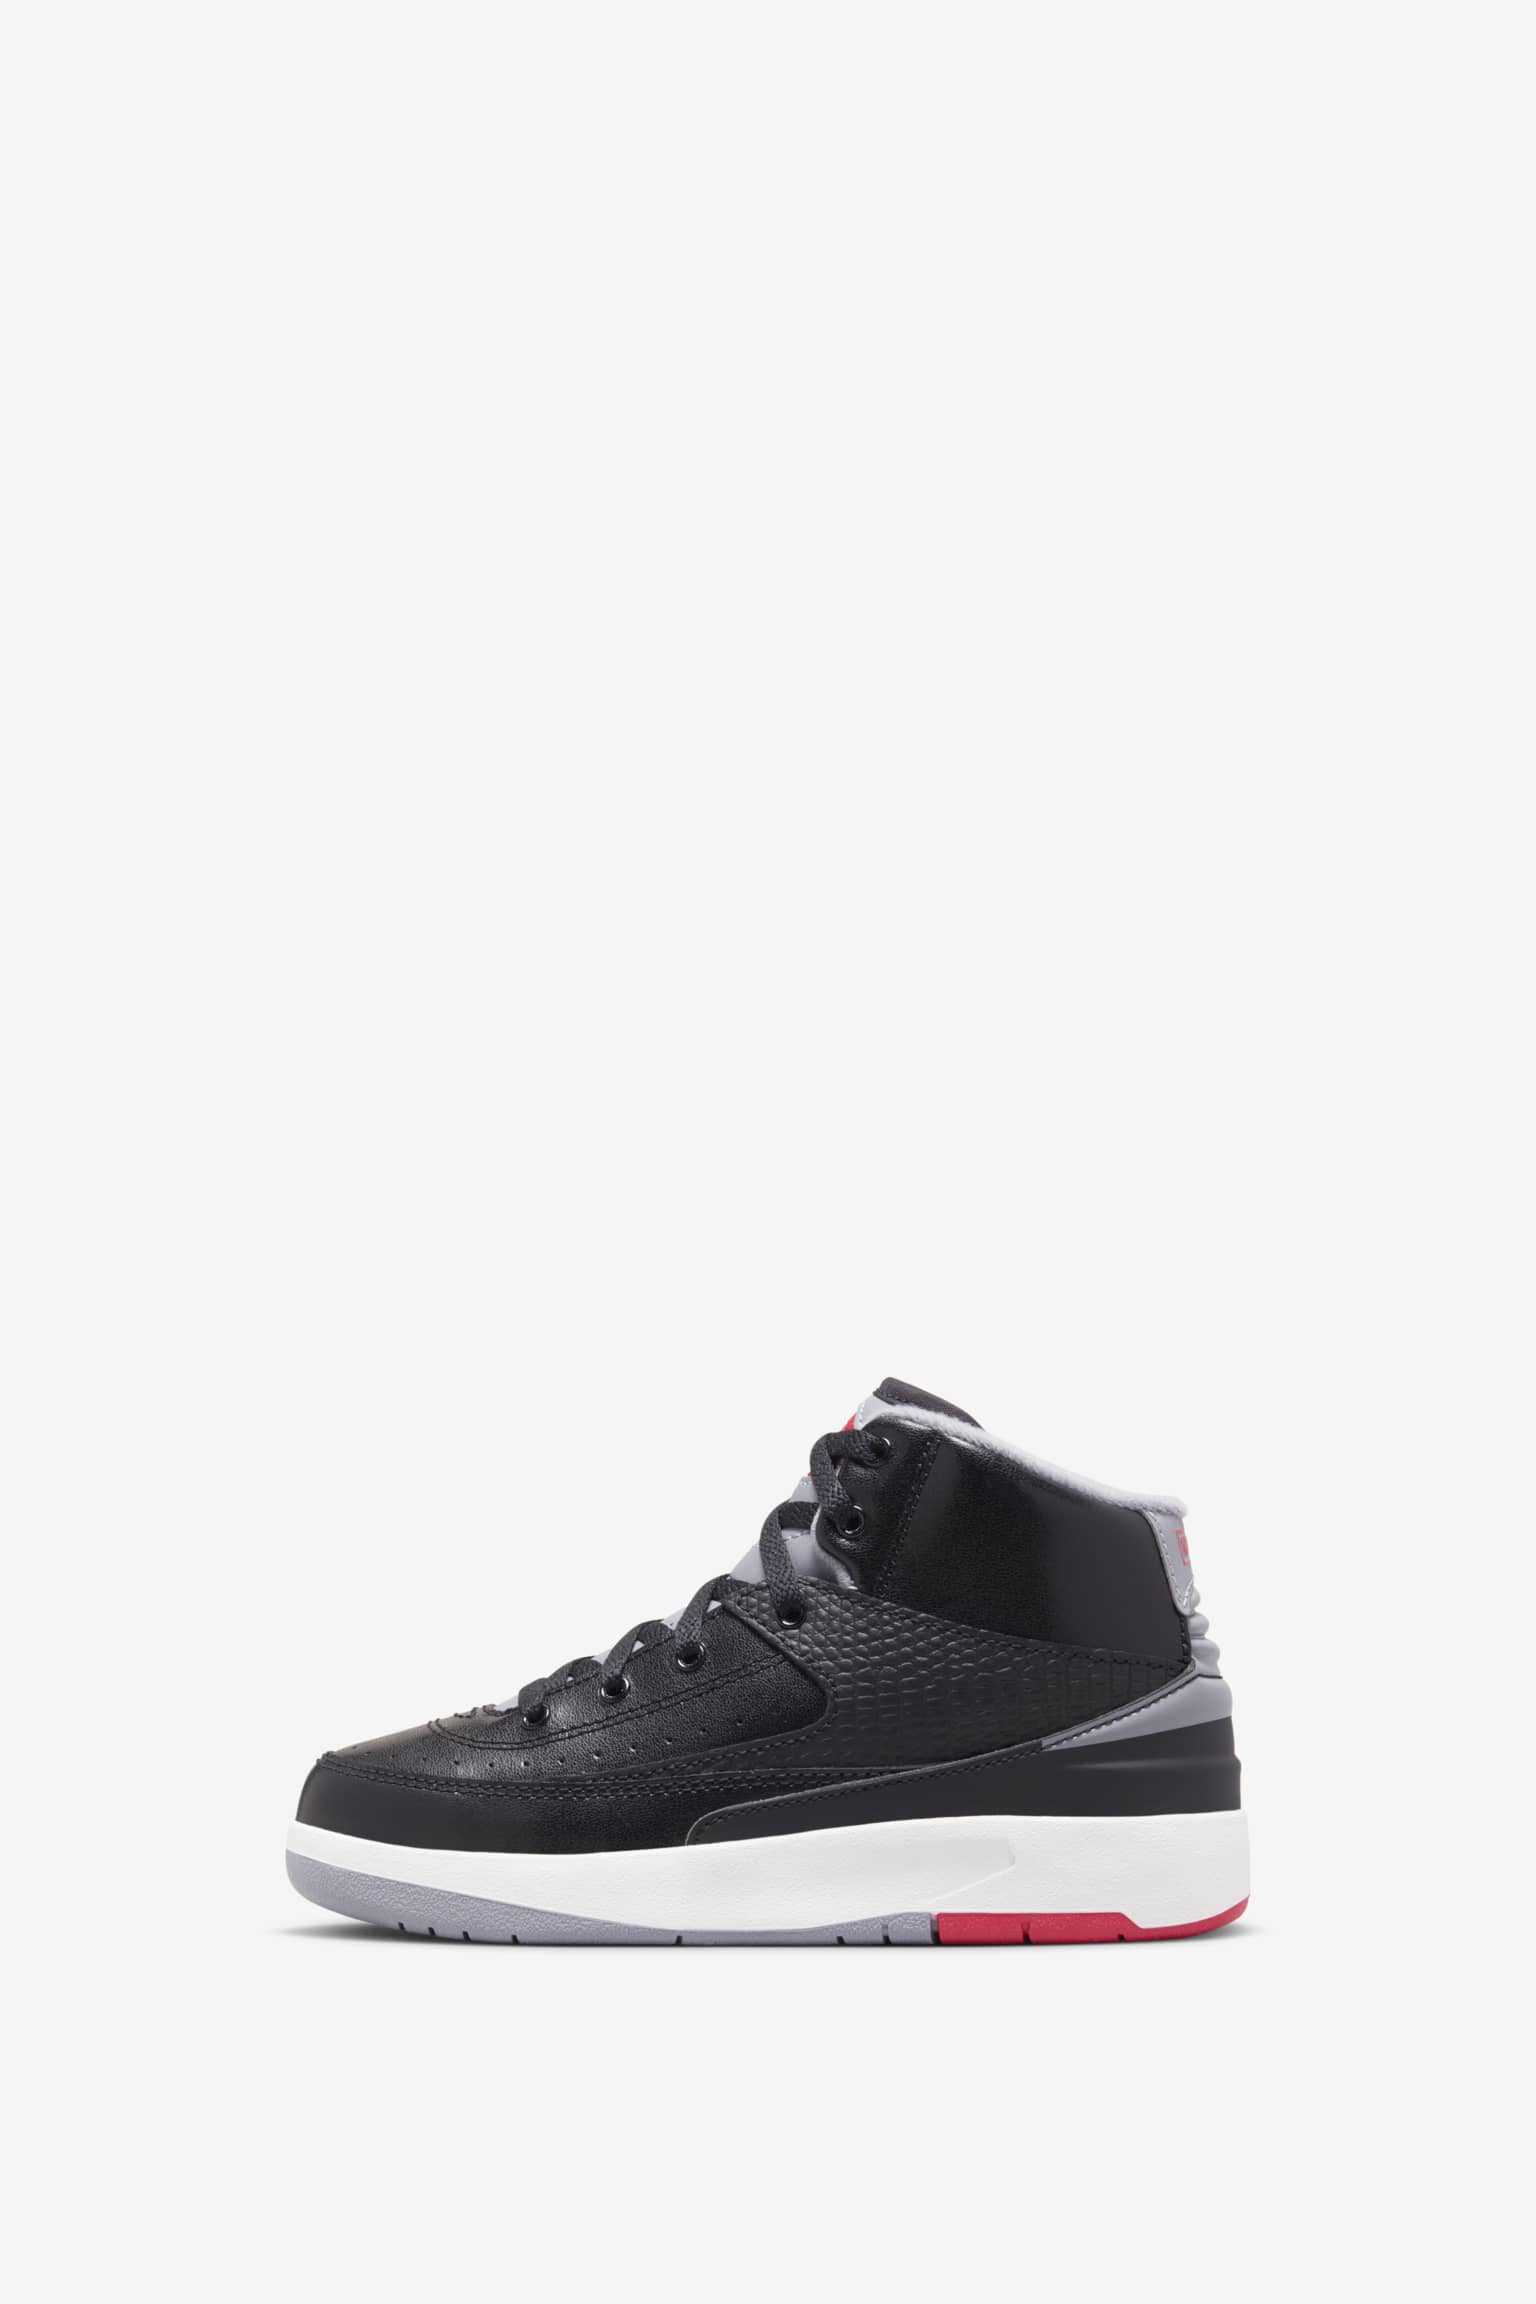 Air Jordan 2 'Black Cement' (DR8884-001) Release Date . Nike SNKRS IN